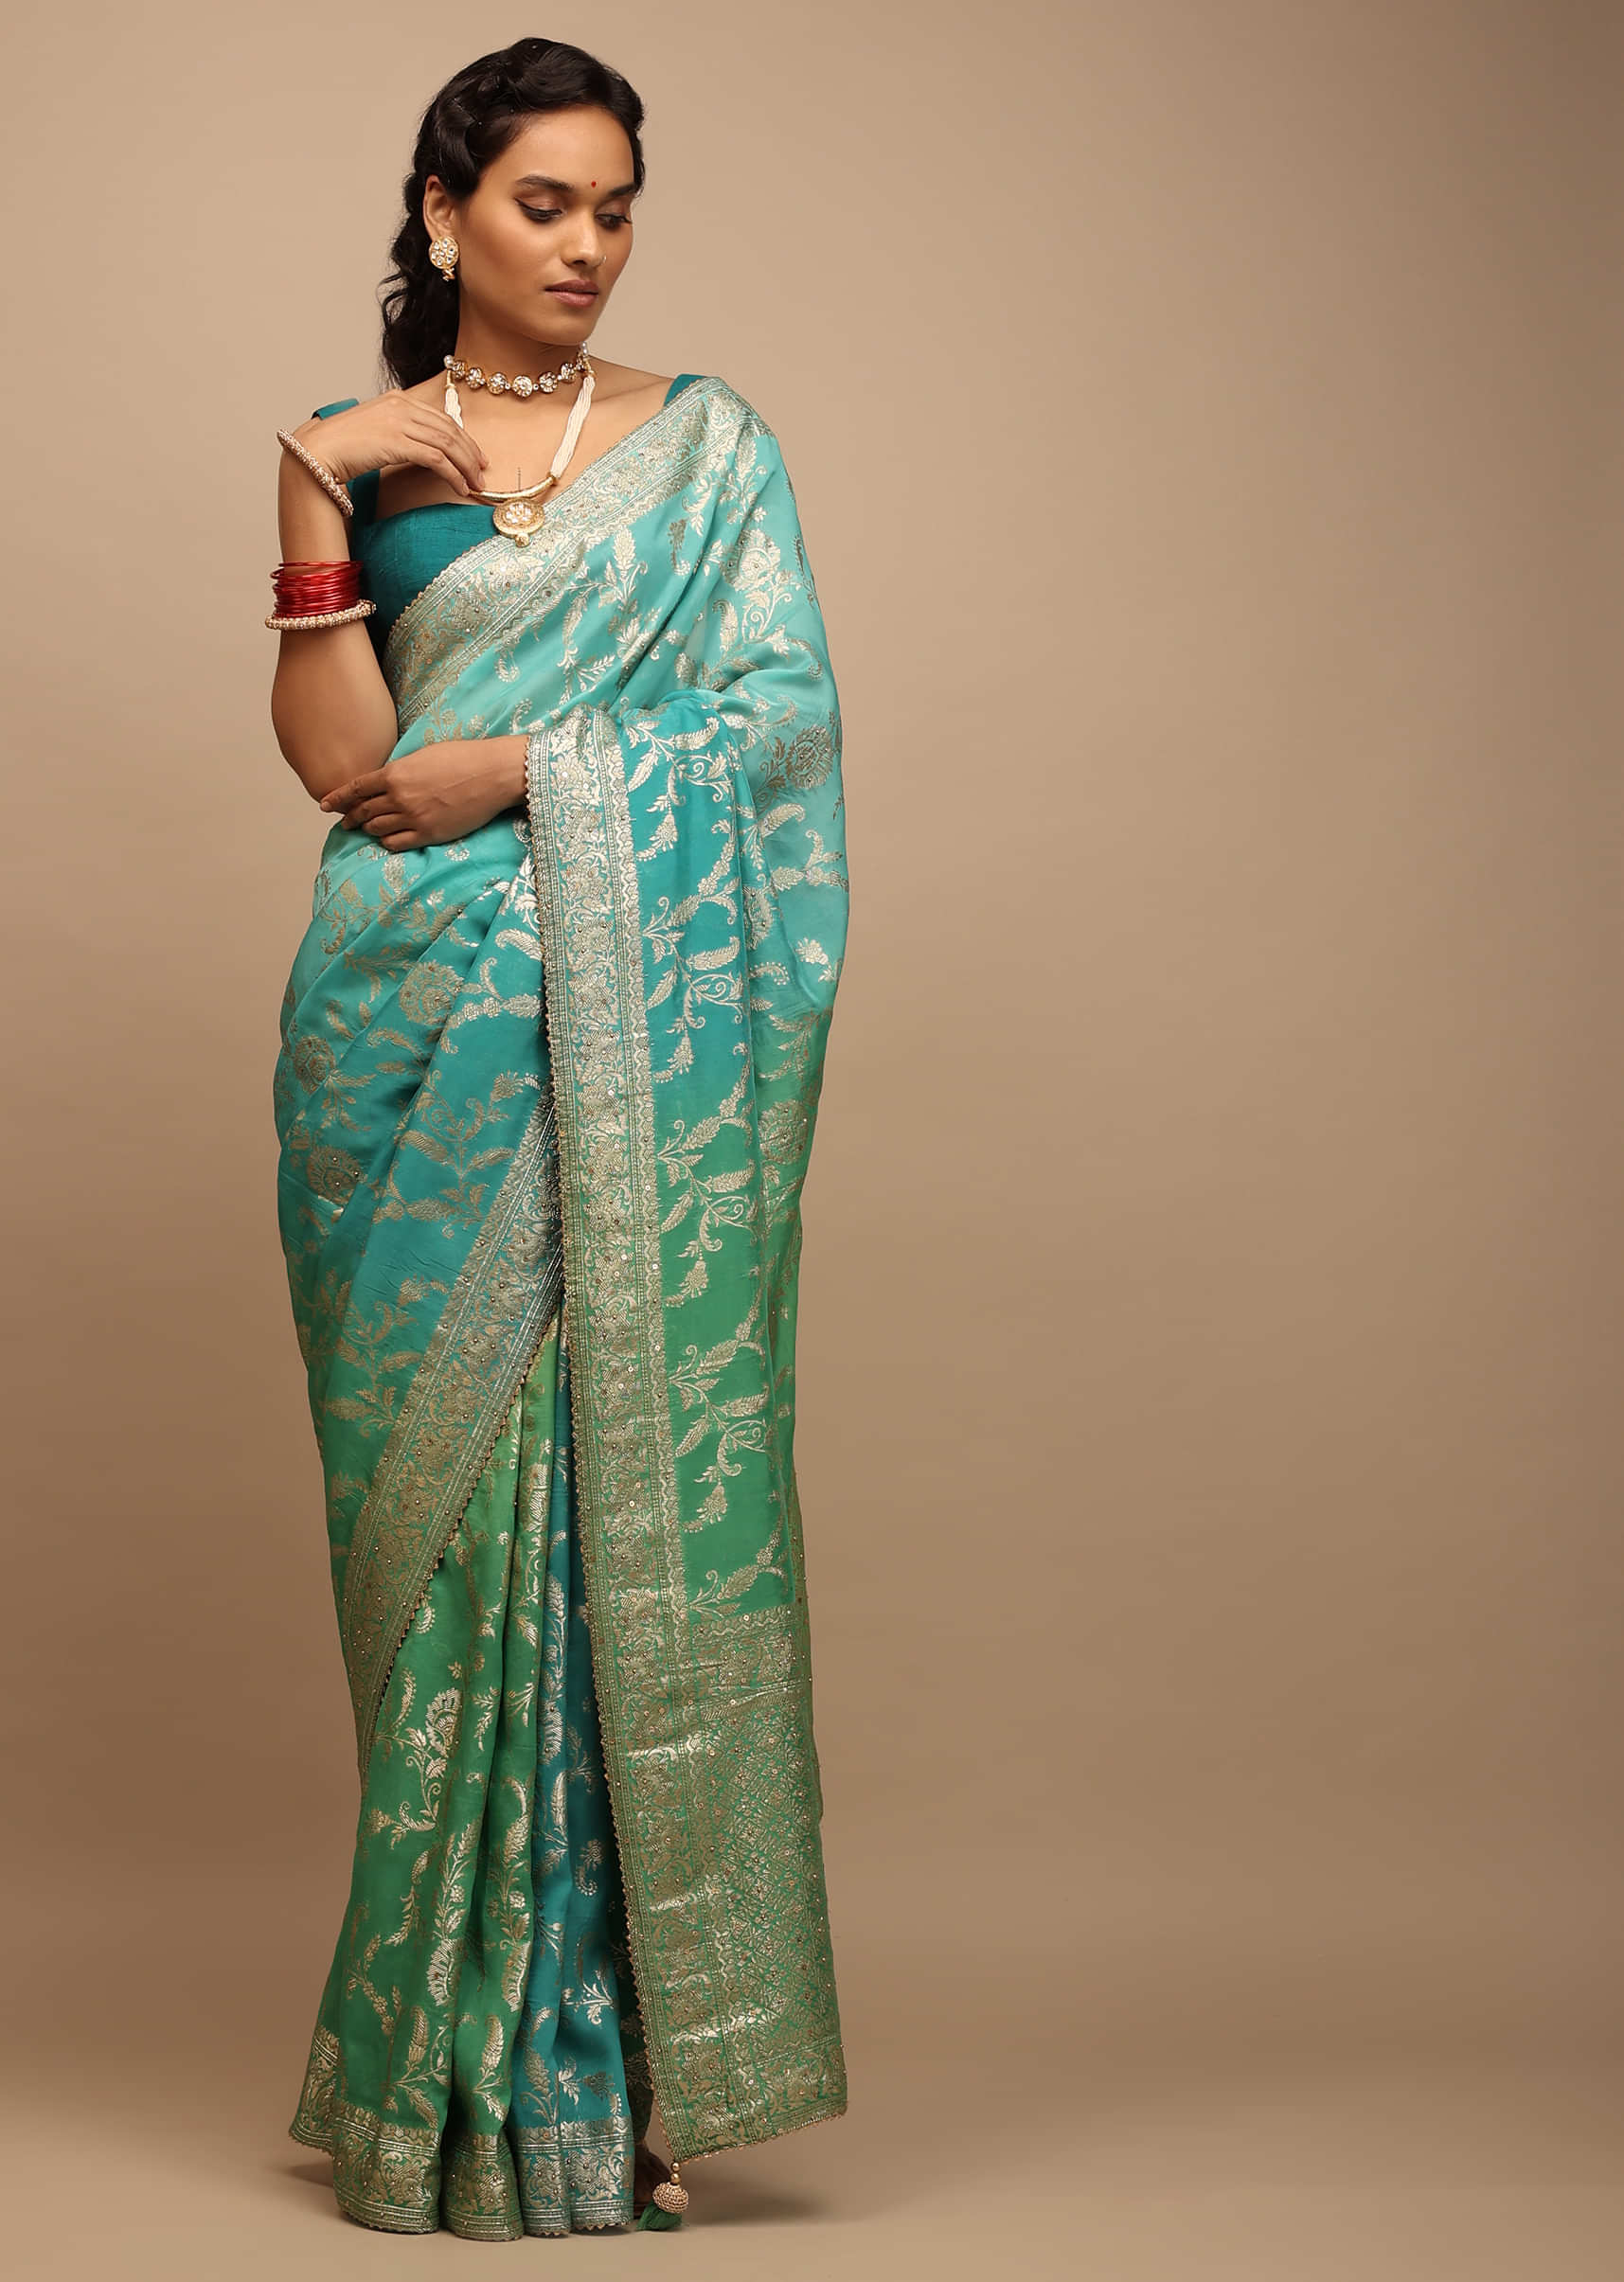 Bangalore Silk – Kanchi Kamakshi Silks